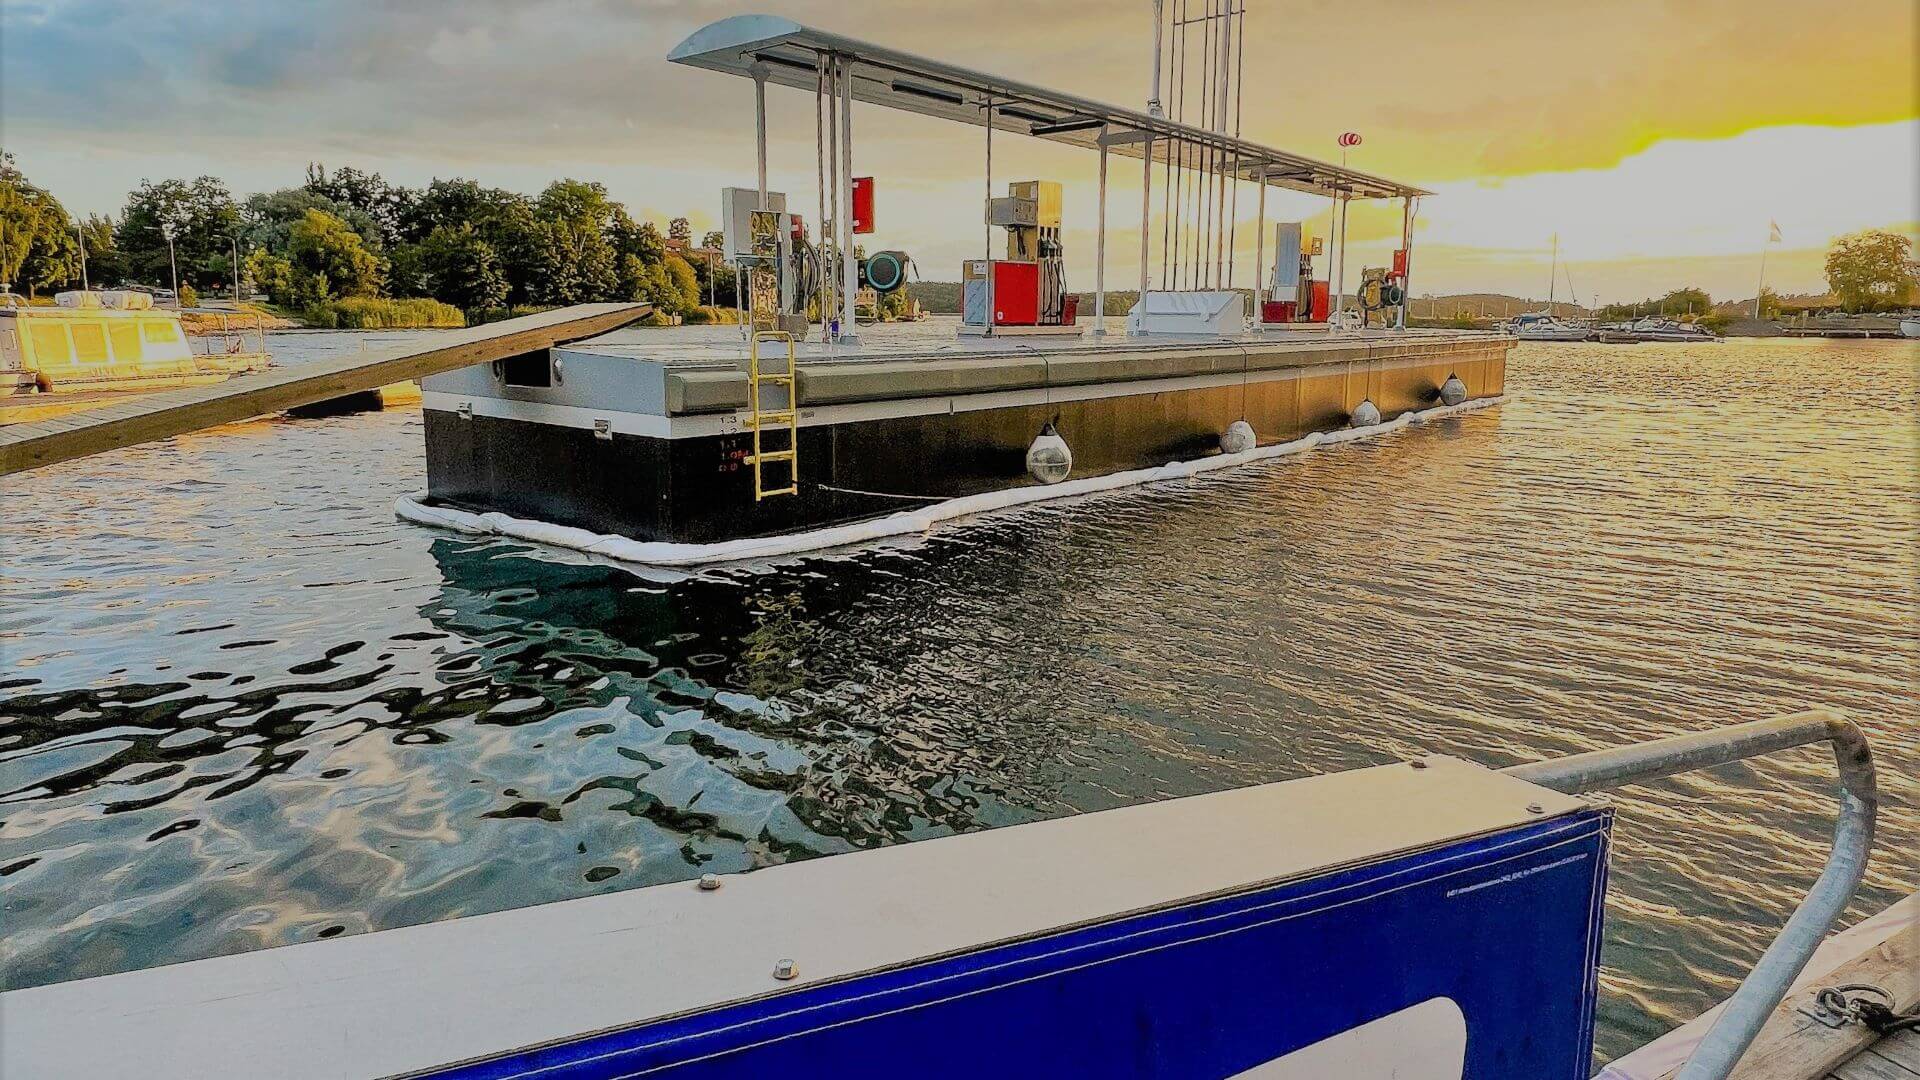 Artist's impression of floating mobile fuel station for boaters